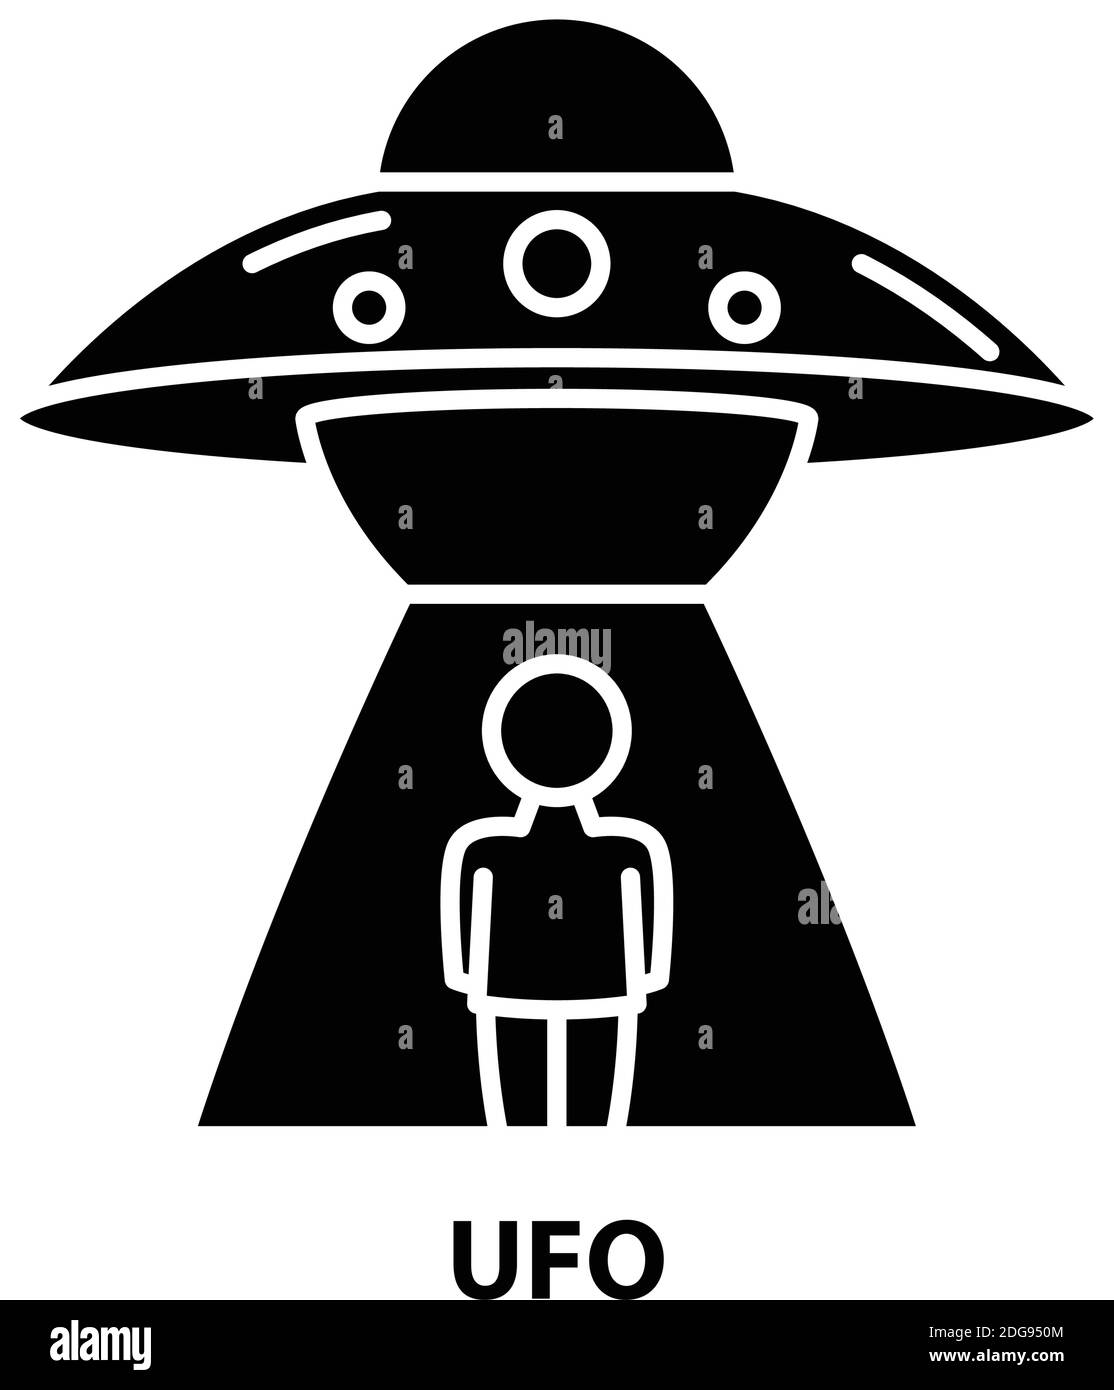 ufo icon, black vector sign with editable strokes, concept illustration Stock Vector